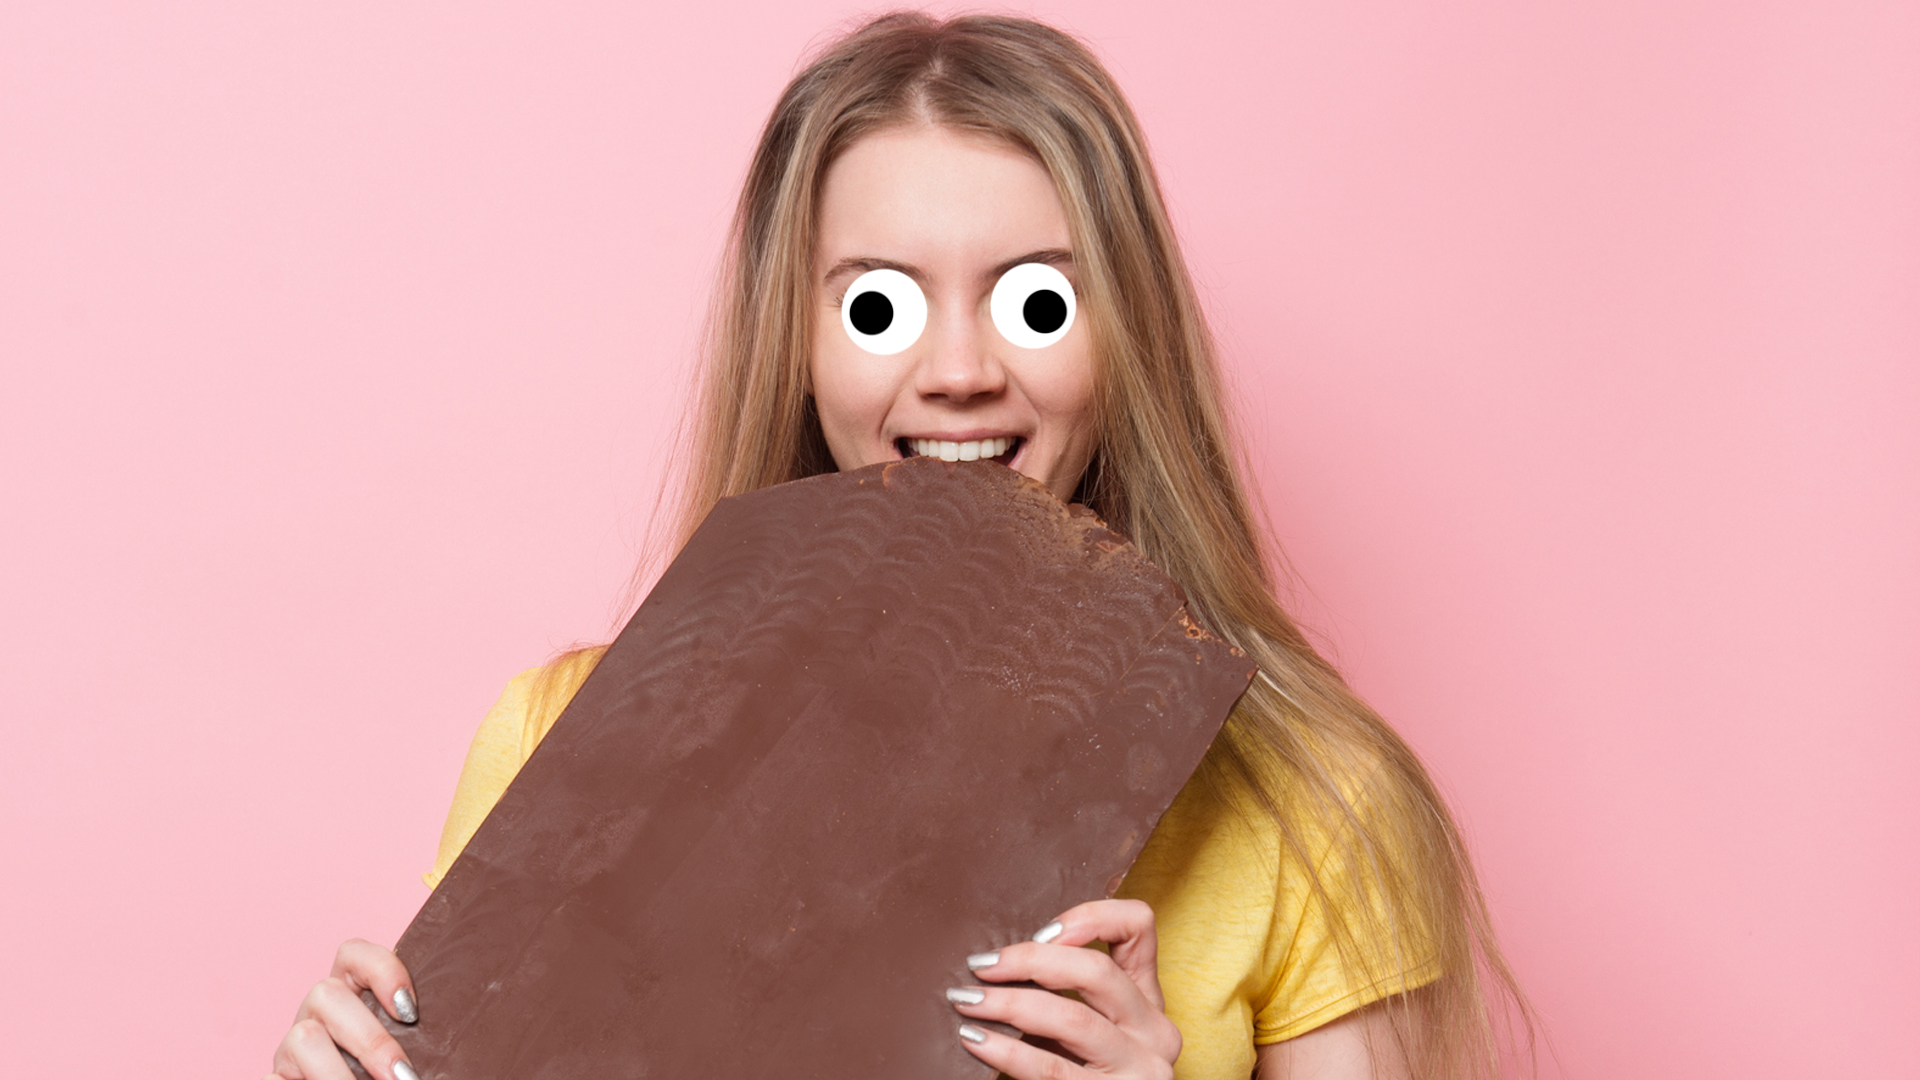 A woman eating a big bar of chocolate 